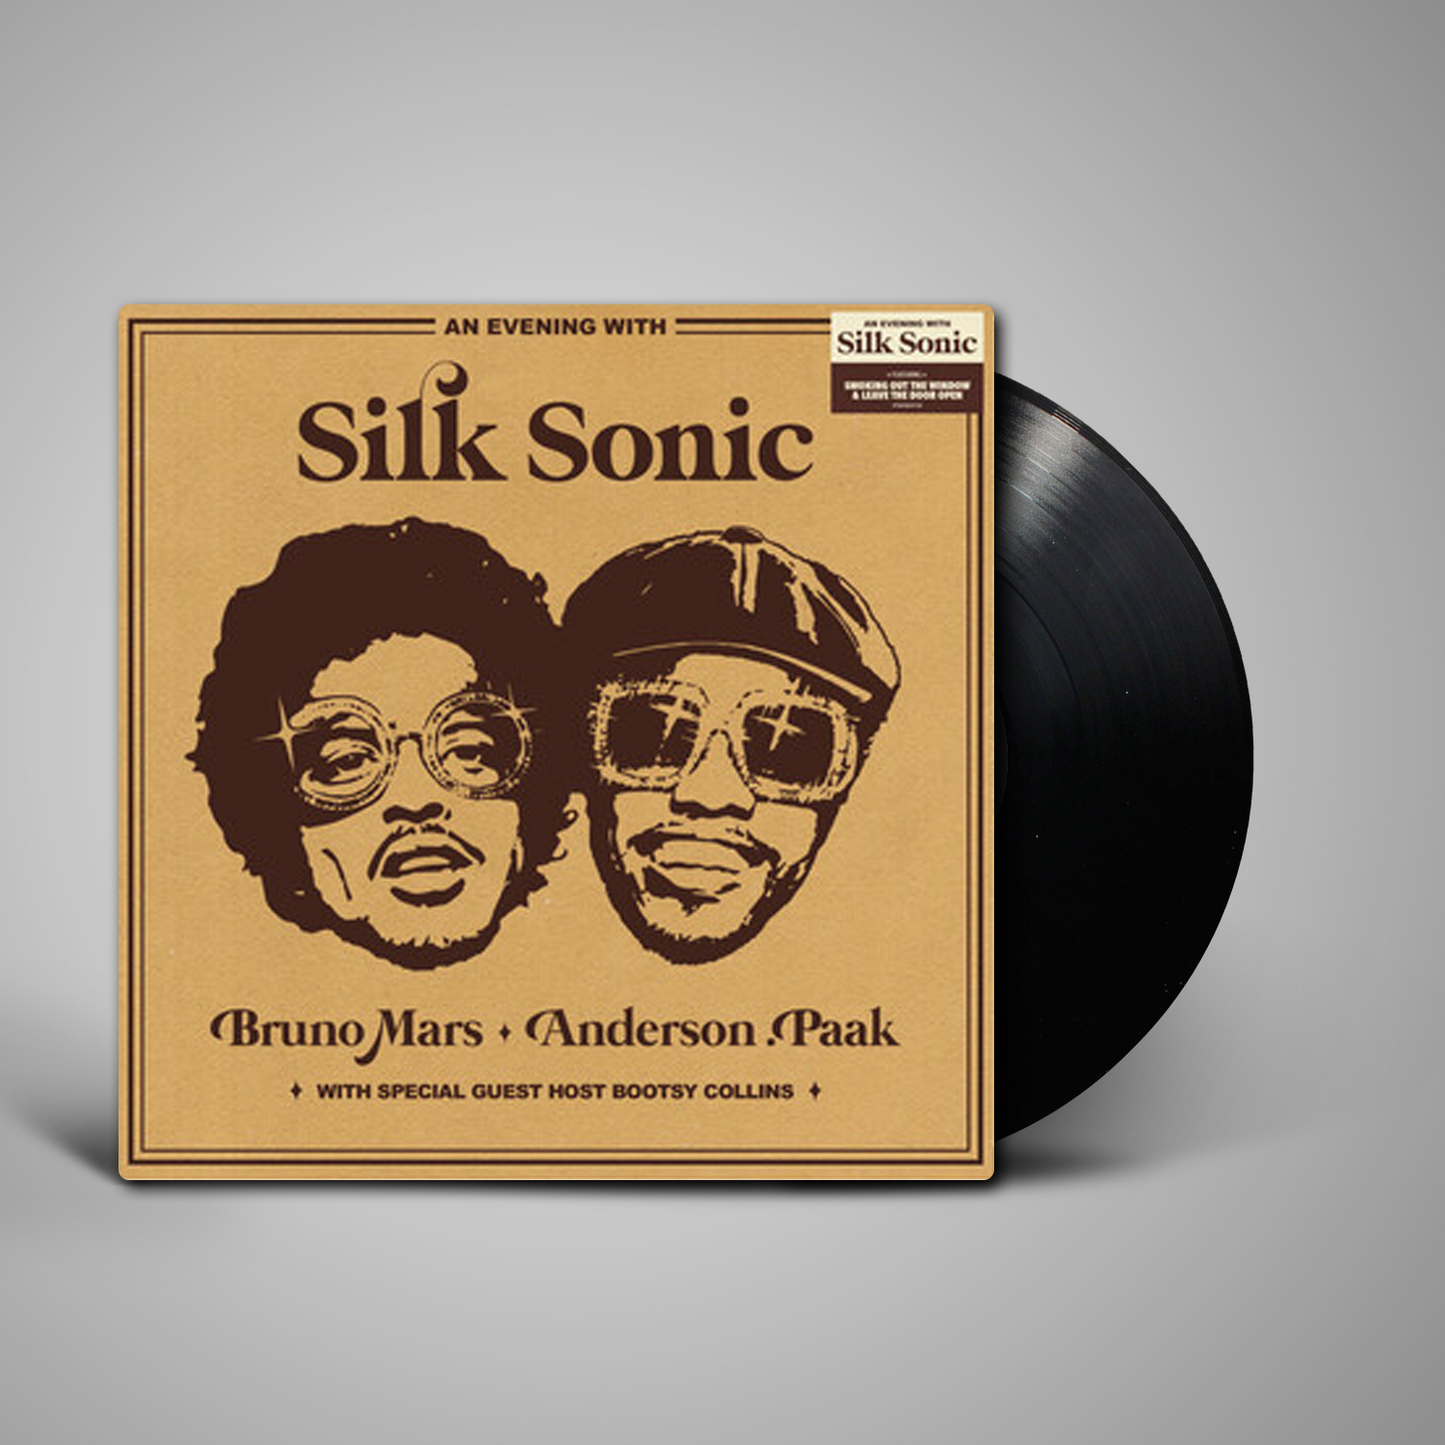 Silk Sonic - An Evening with Silk Sonic